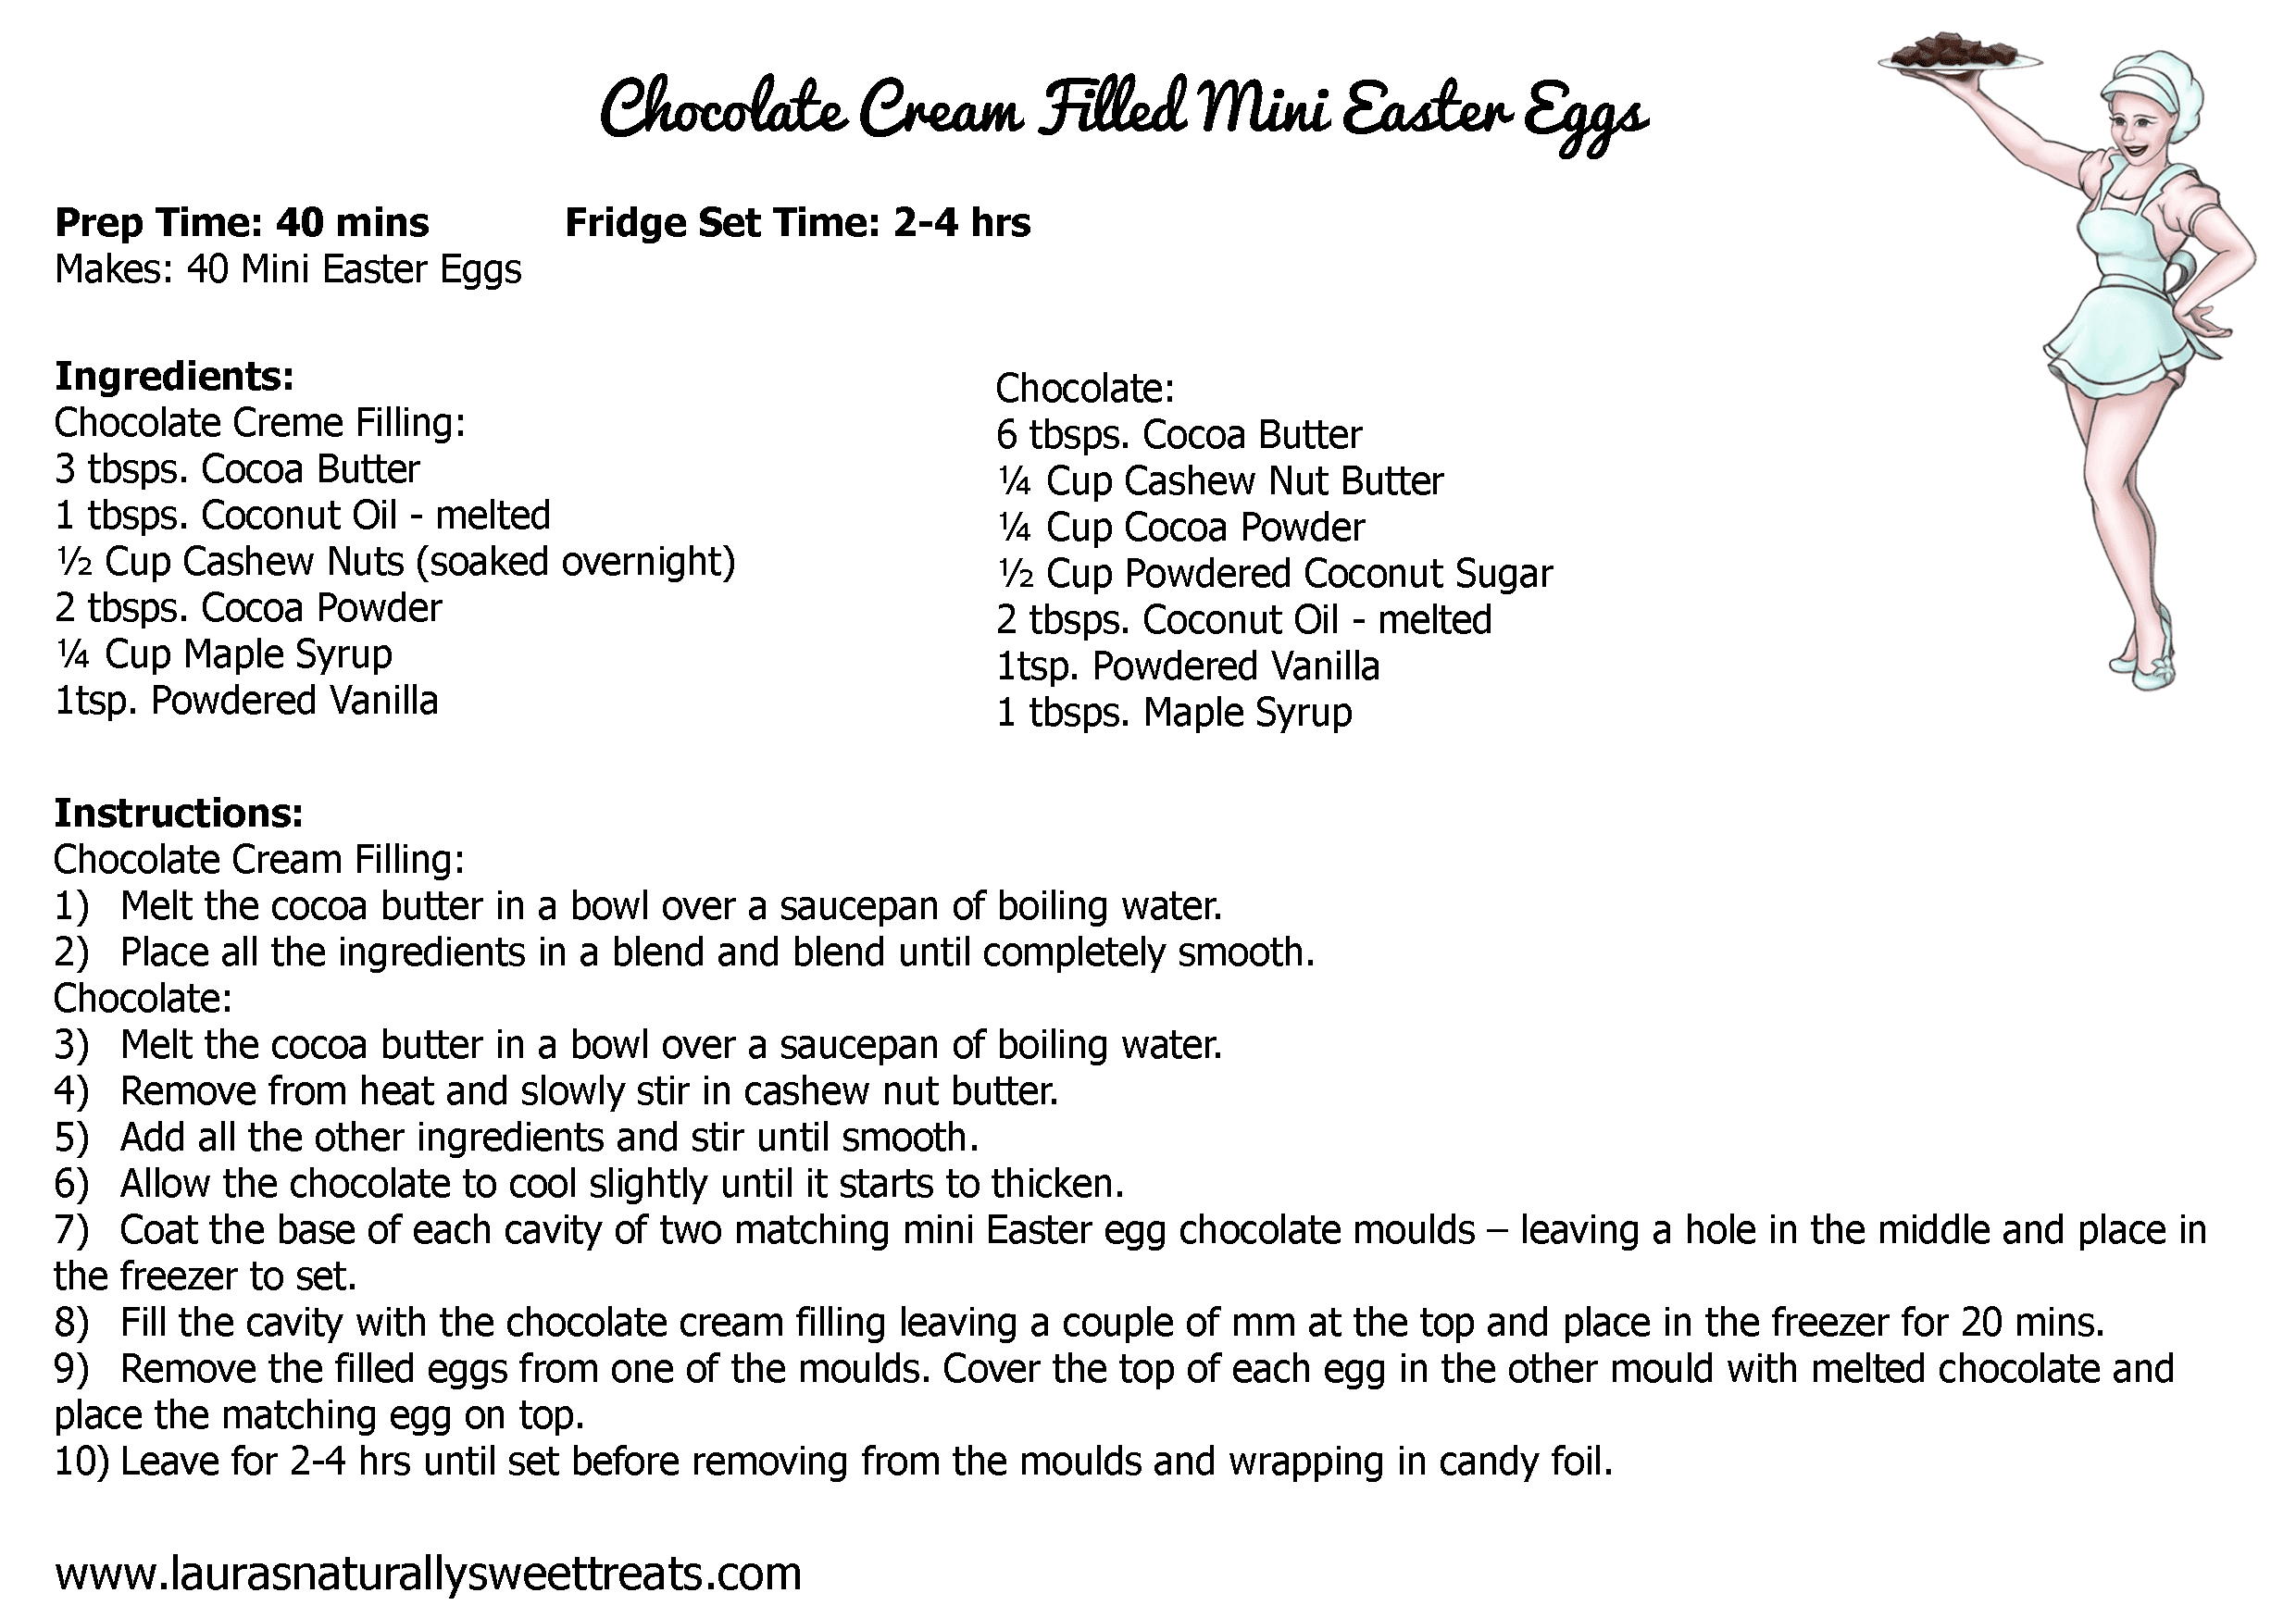 chocolate cream filled mini easter eggs recipe card